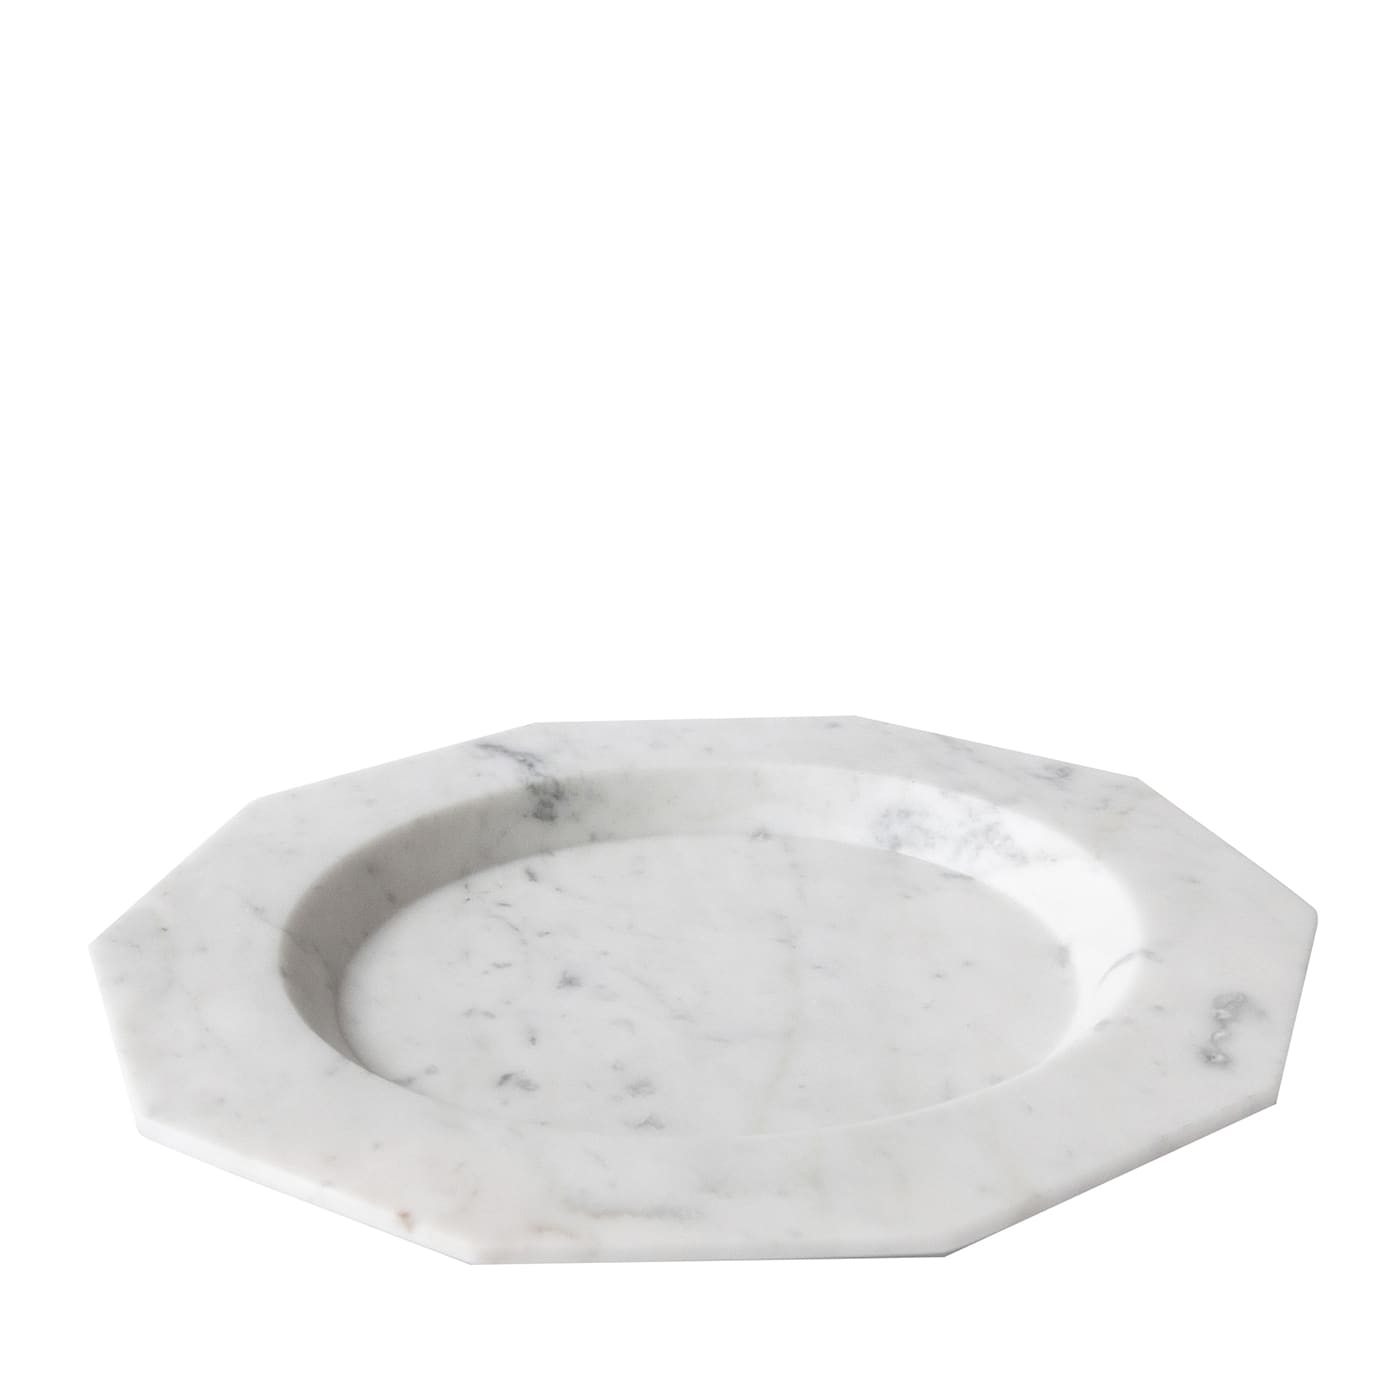 Dinner Plate in white Carrara marble - FiammettaV Home Collection